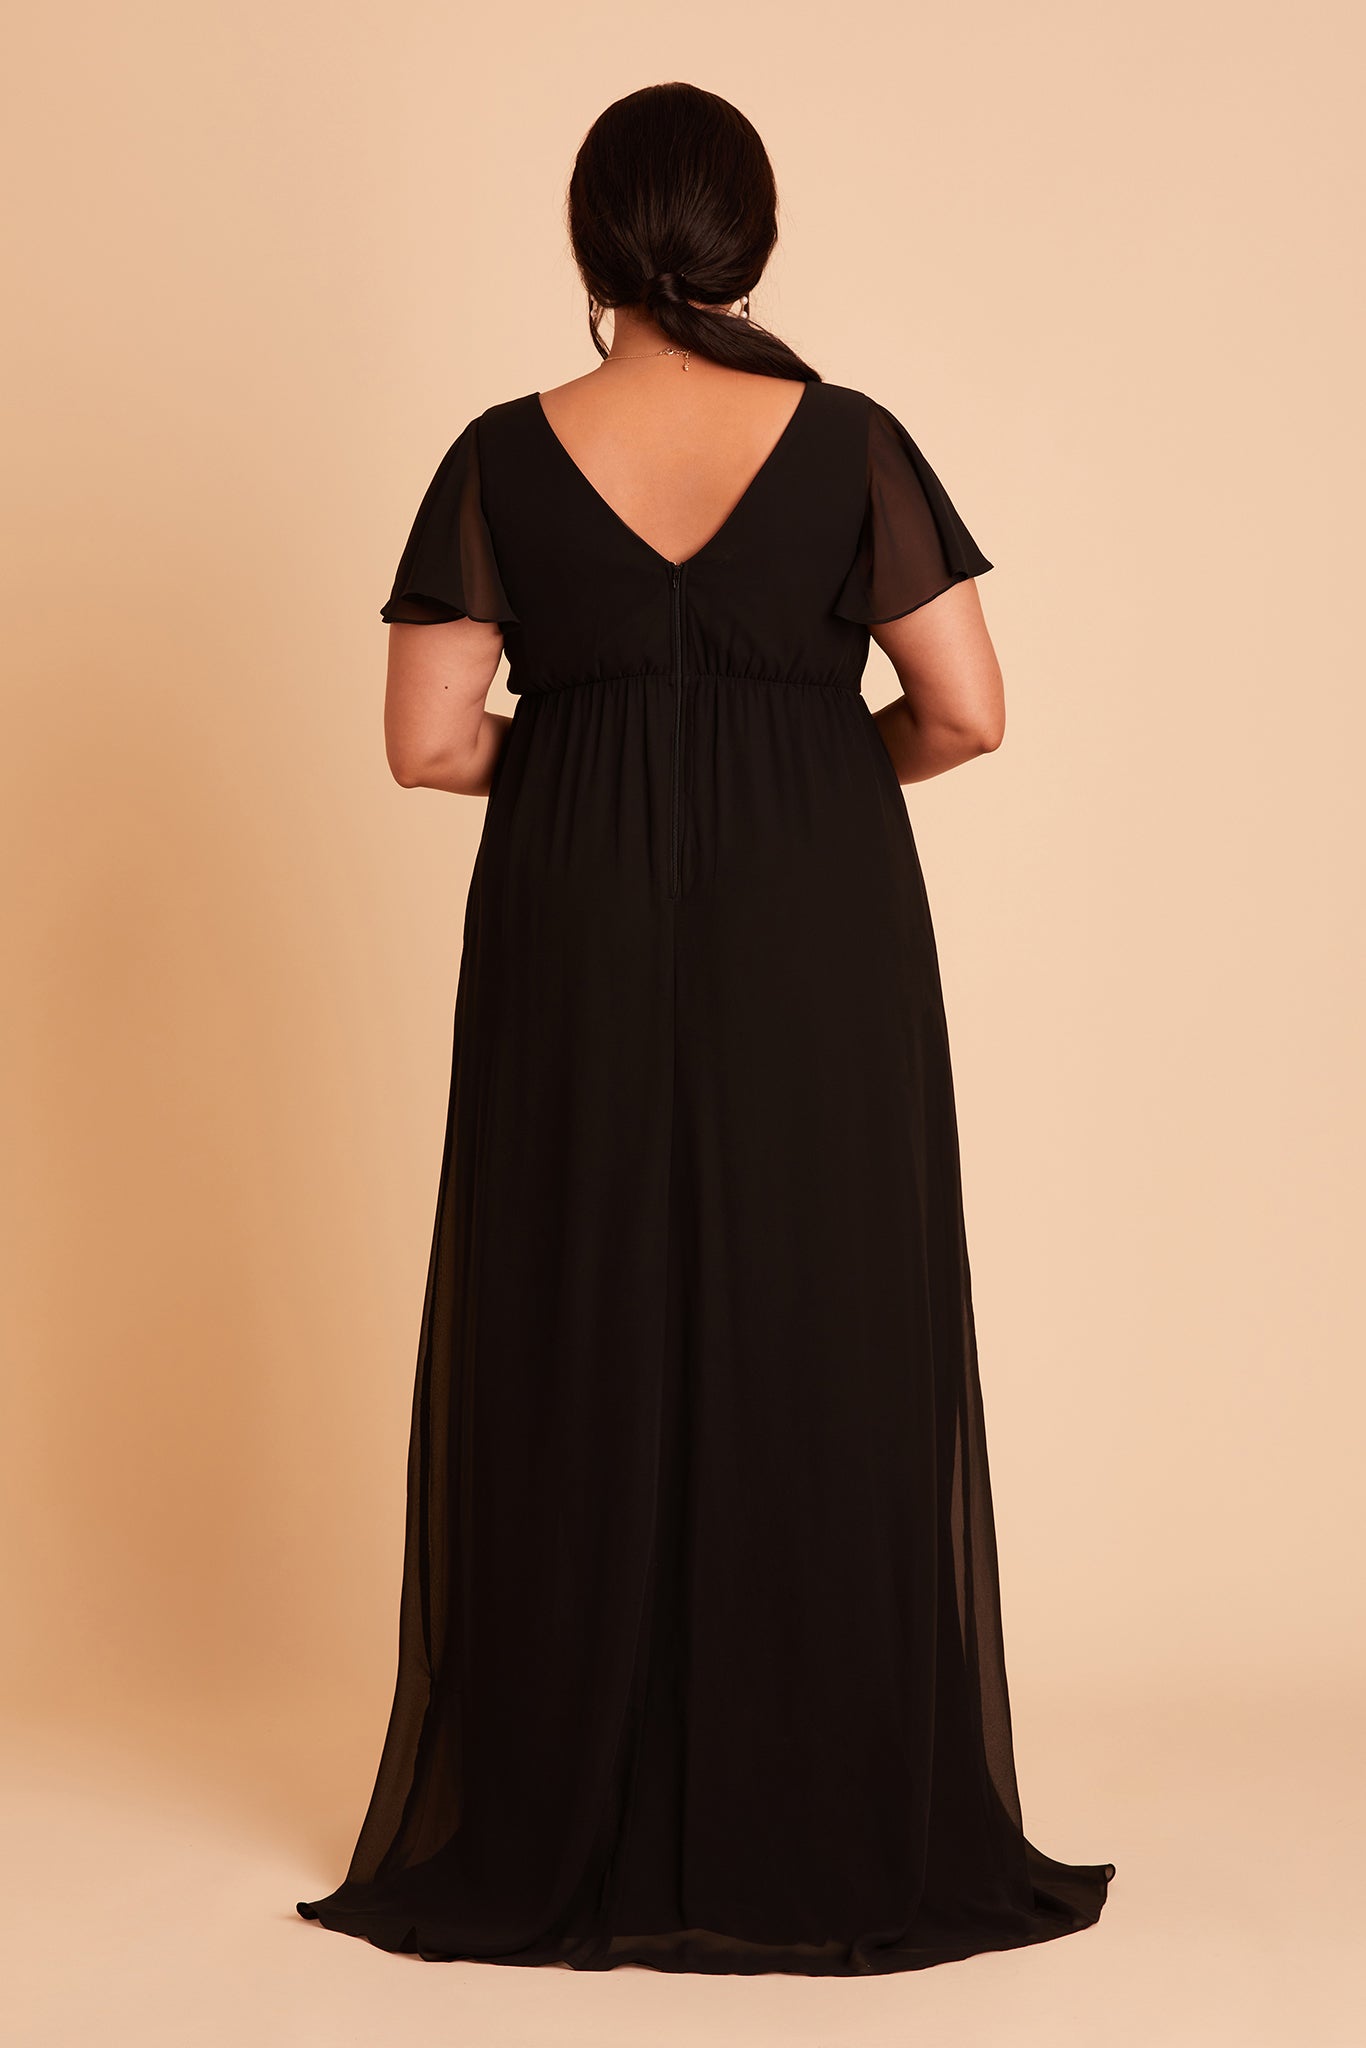 Hannah empire plus size bridesmaid dress in black chiffon by Birdy Grey, back view